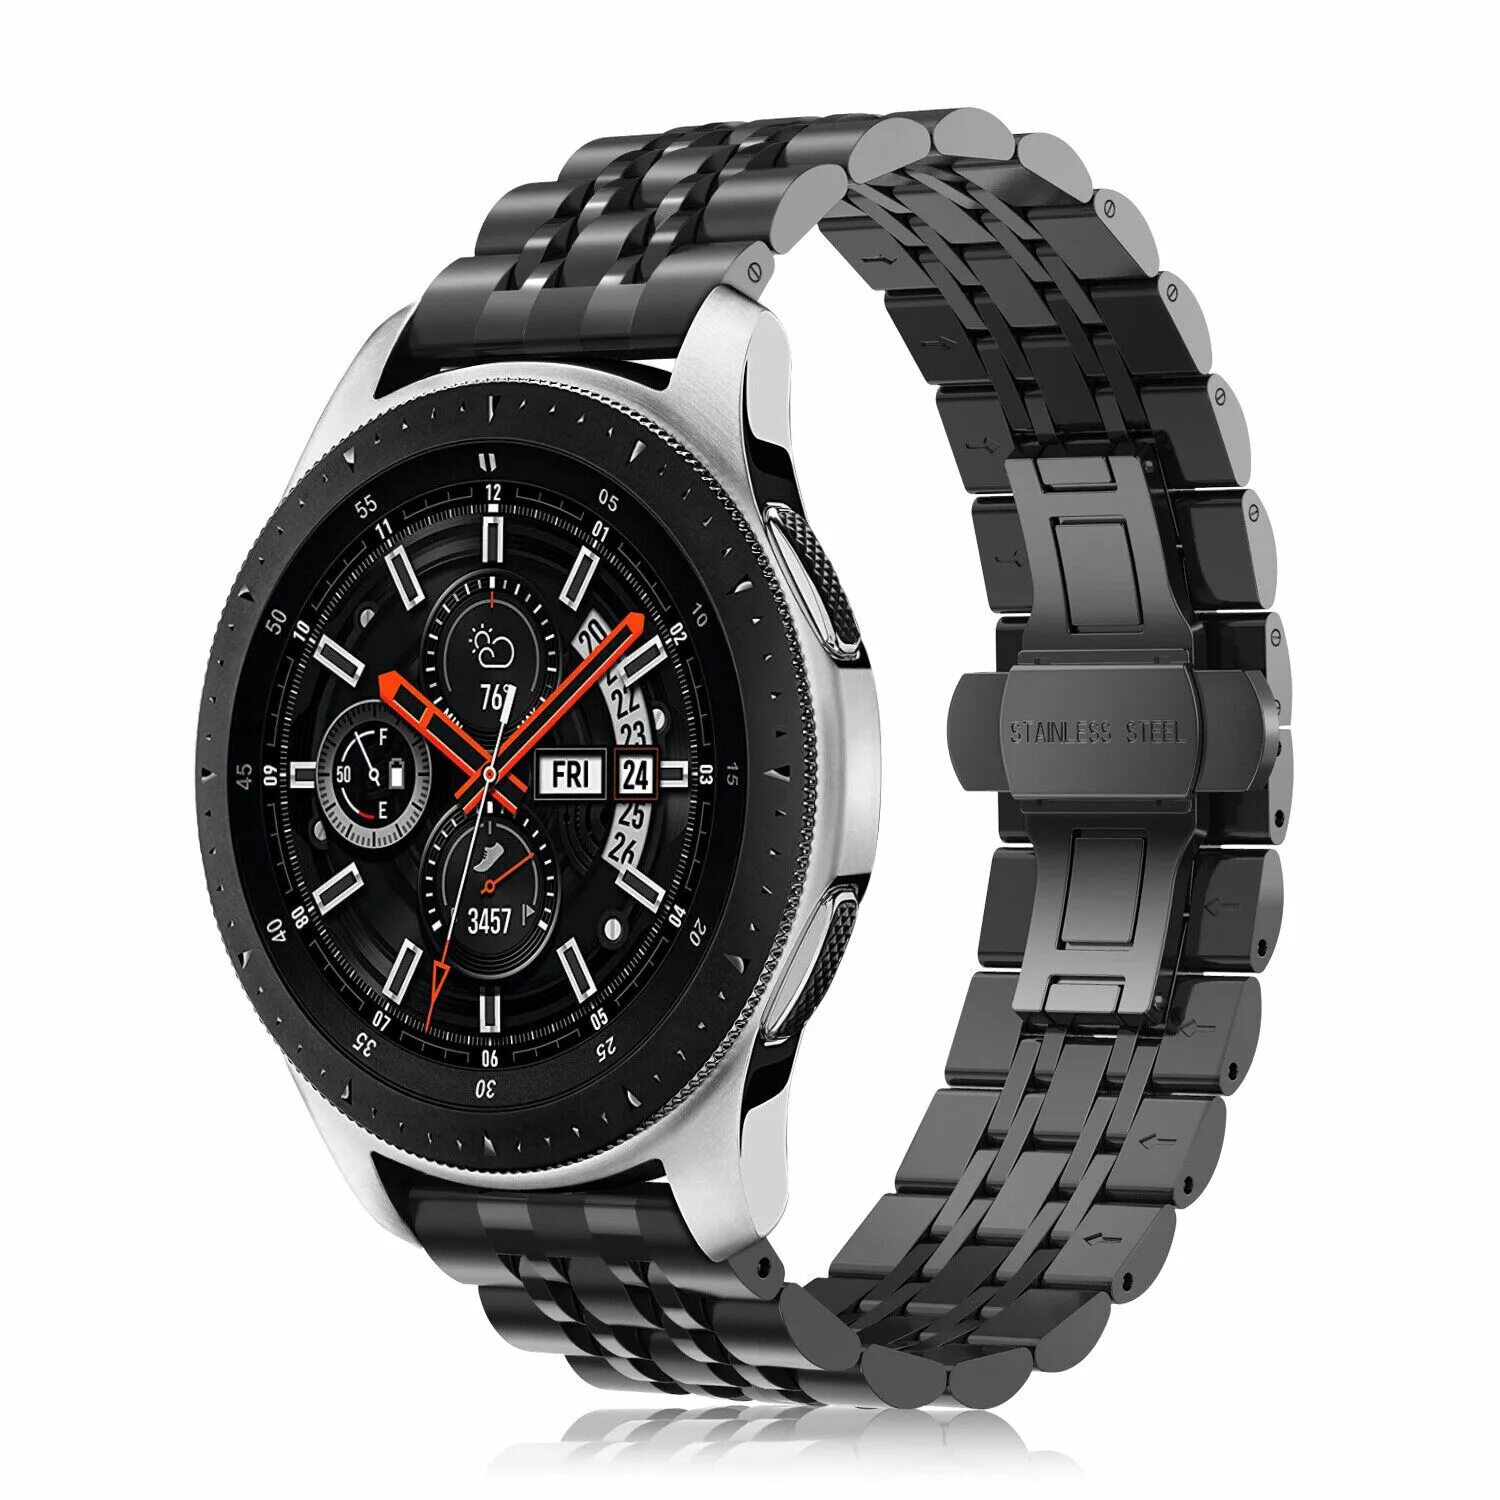 Galaxy watch 46mm. Samsung Galaxy watch 46mm. Samsung Galaxy watch SM-r800. Samsung Galaxy watch r800 46mm. Samsung Galaxy watch 46мм.